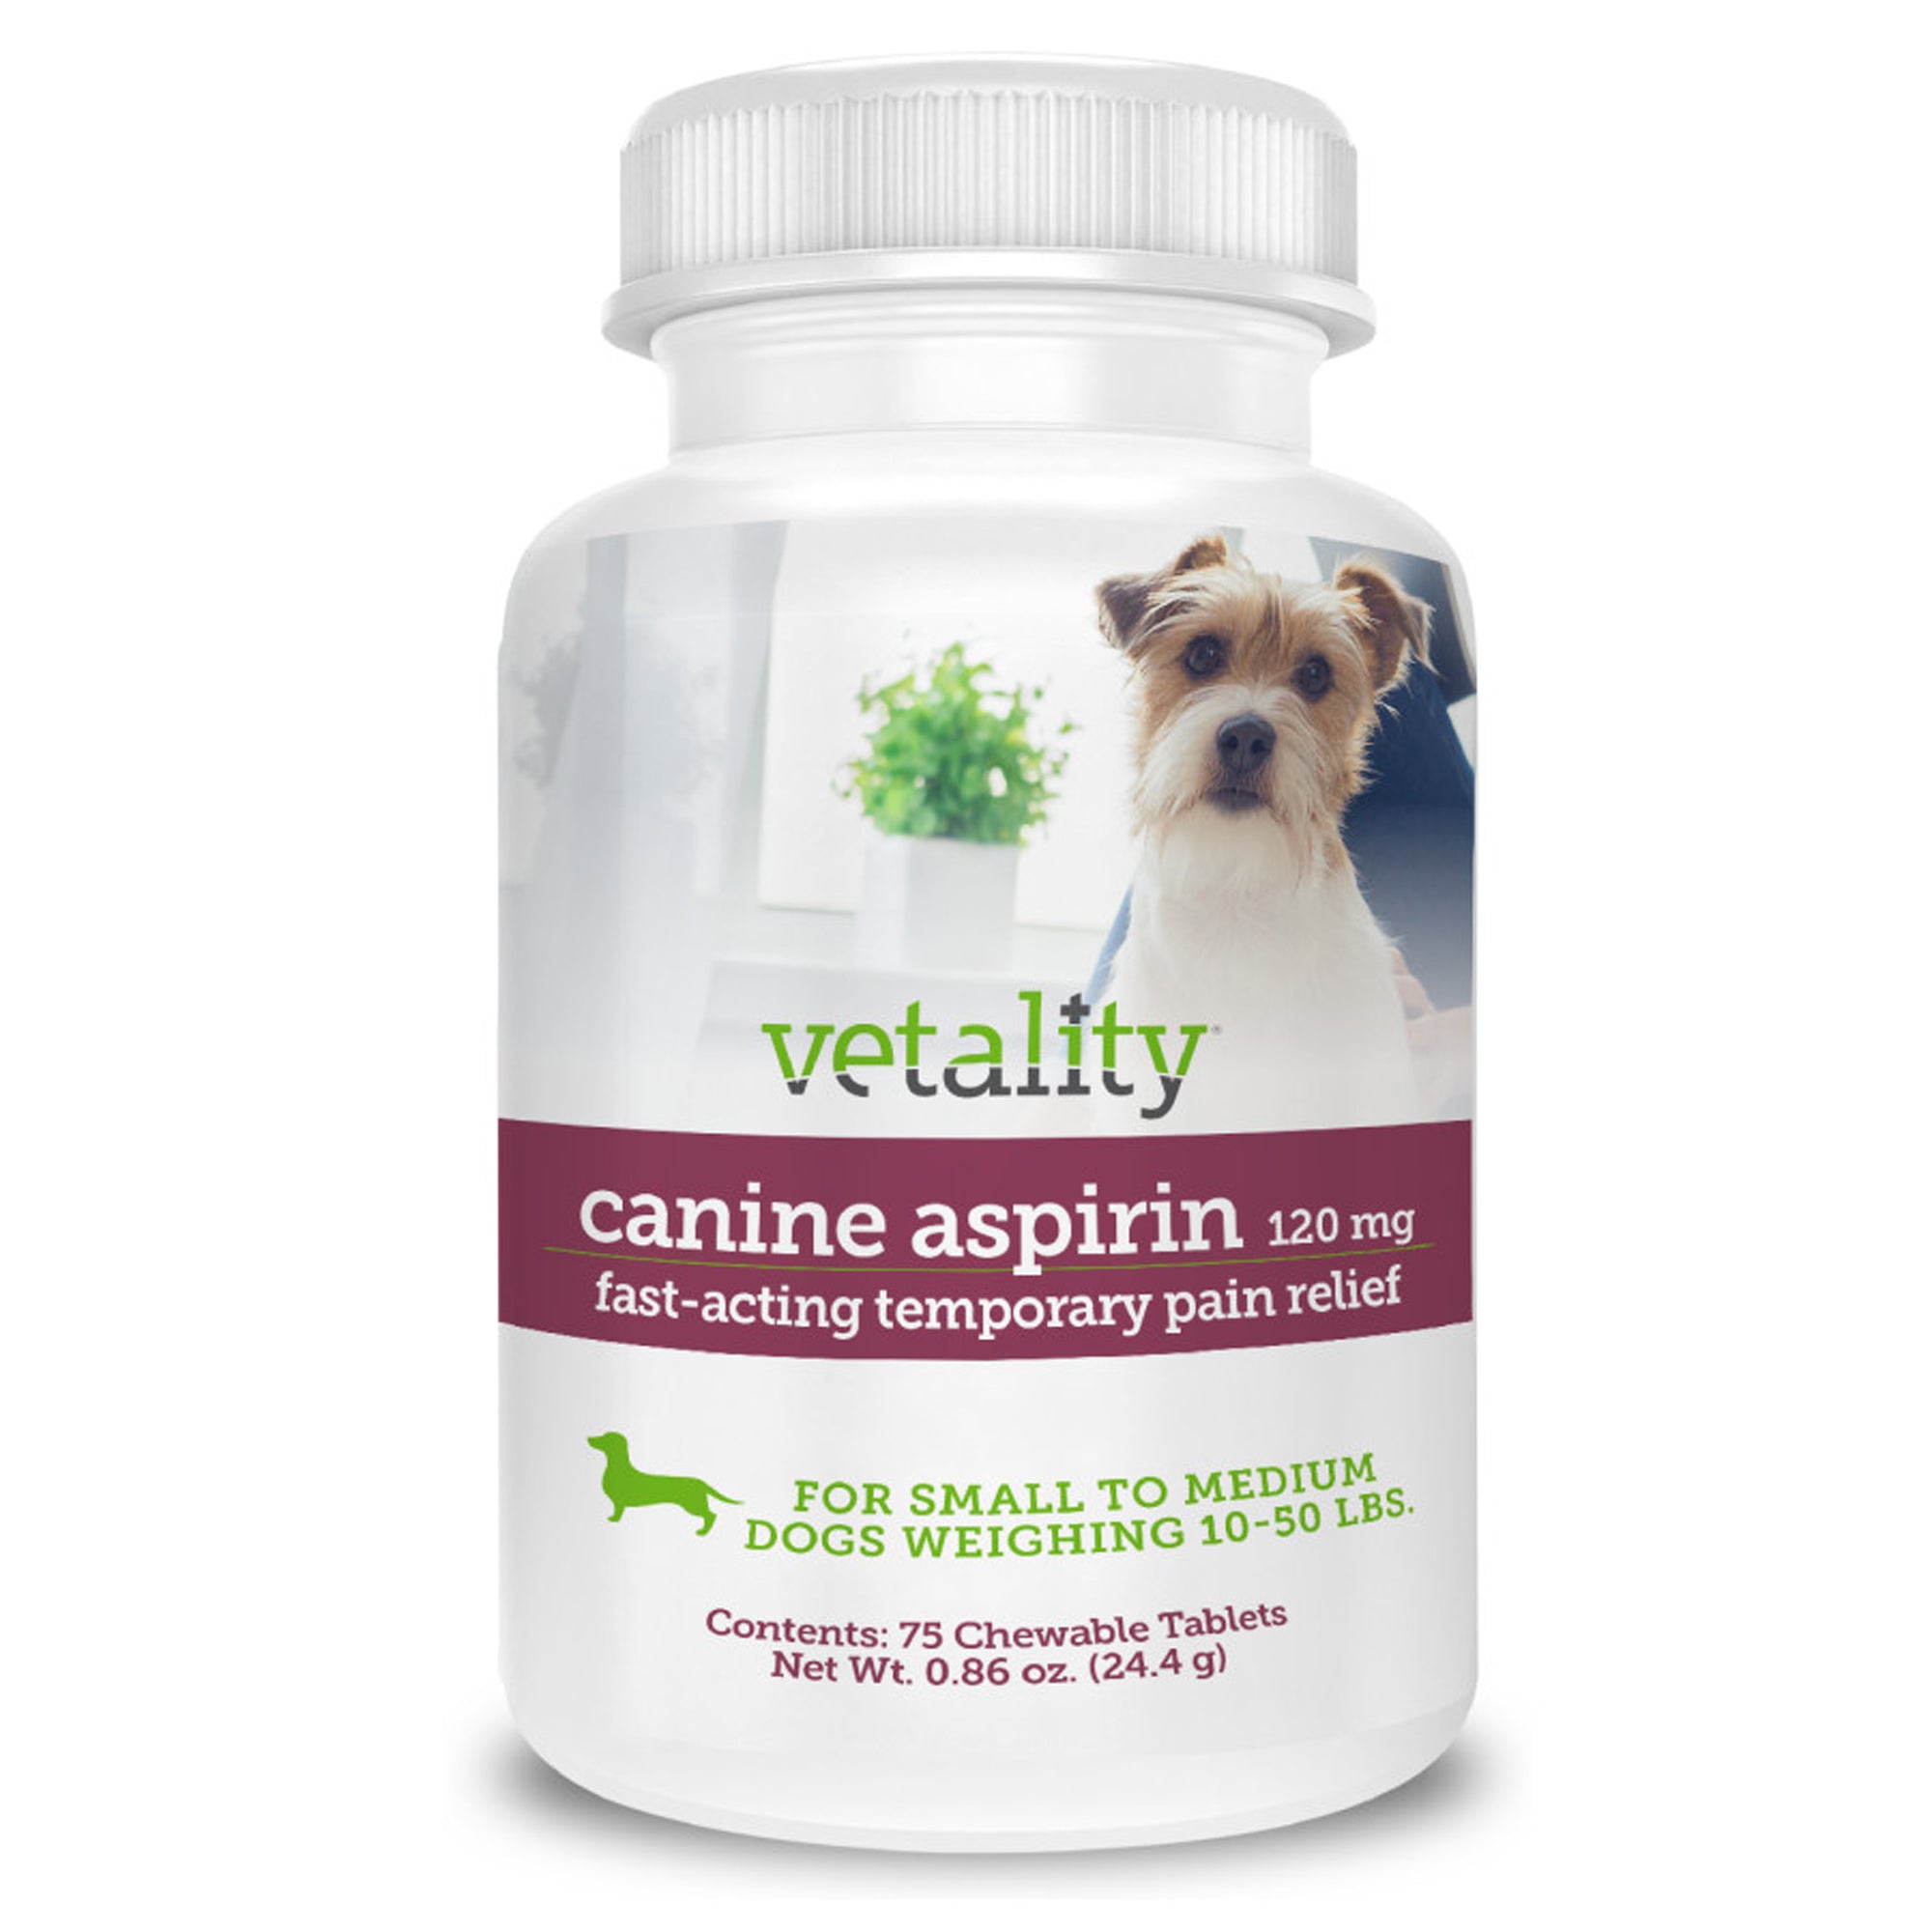 Vetality Canine Aspirin Chewable Tables 120mg 1ea-75 ct